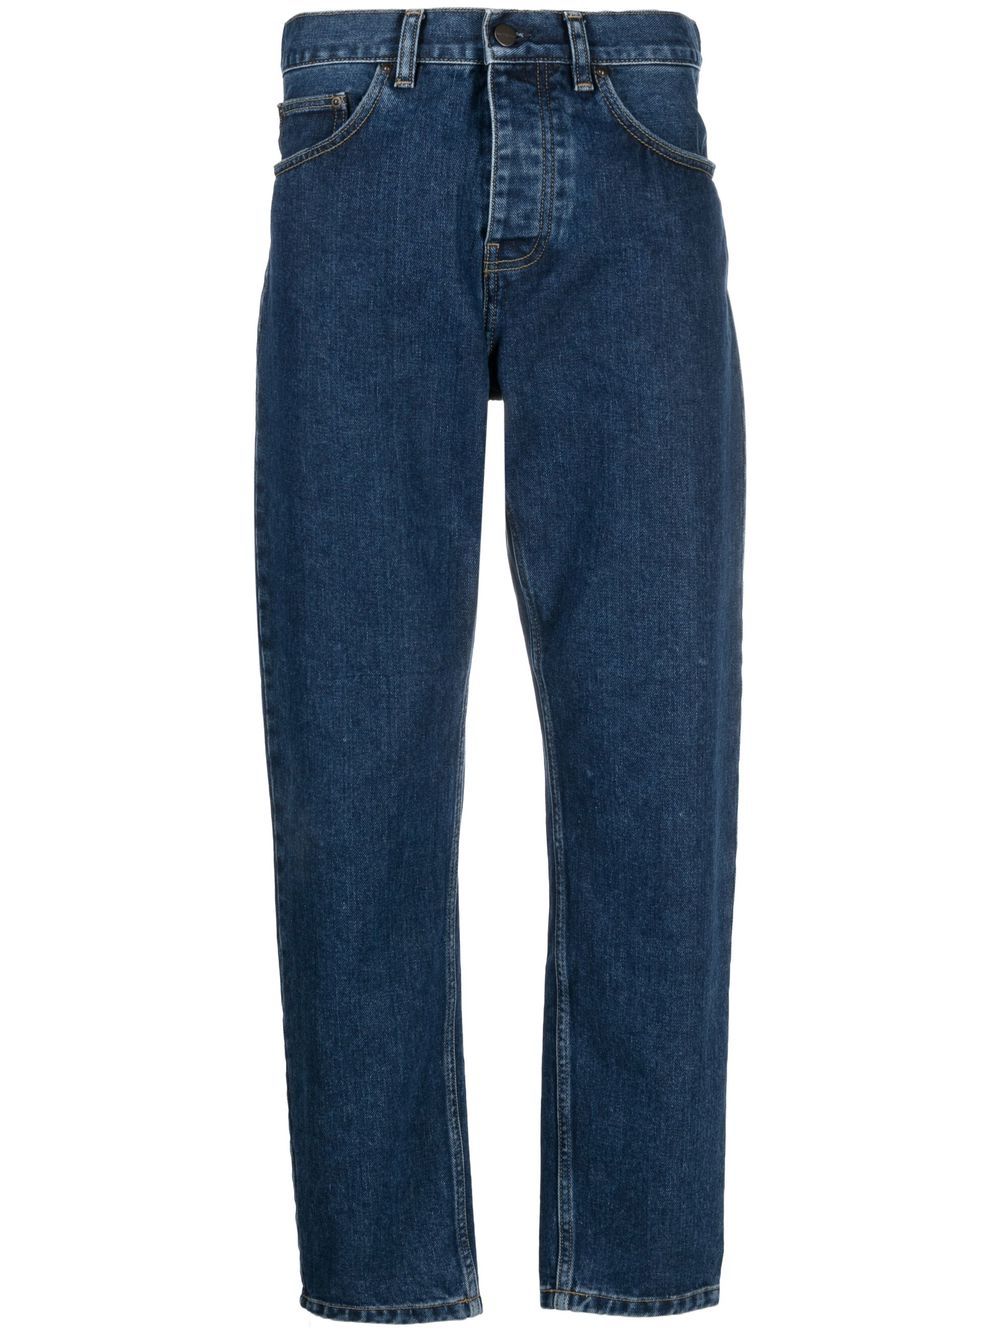 Low-rise straight-leg jeans